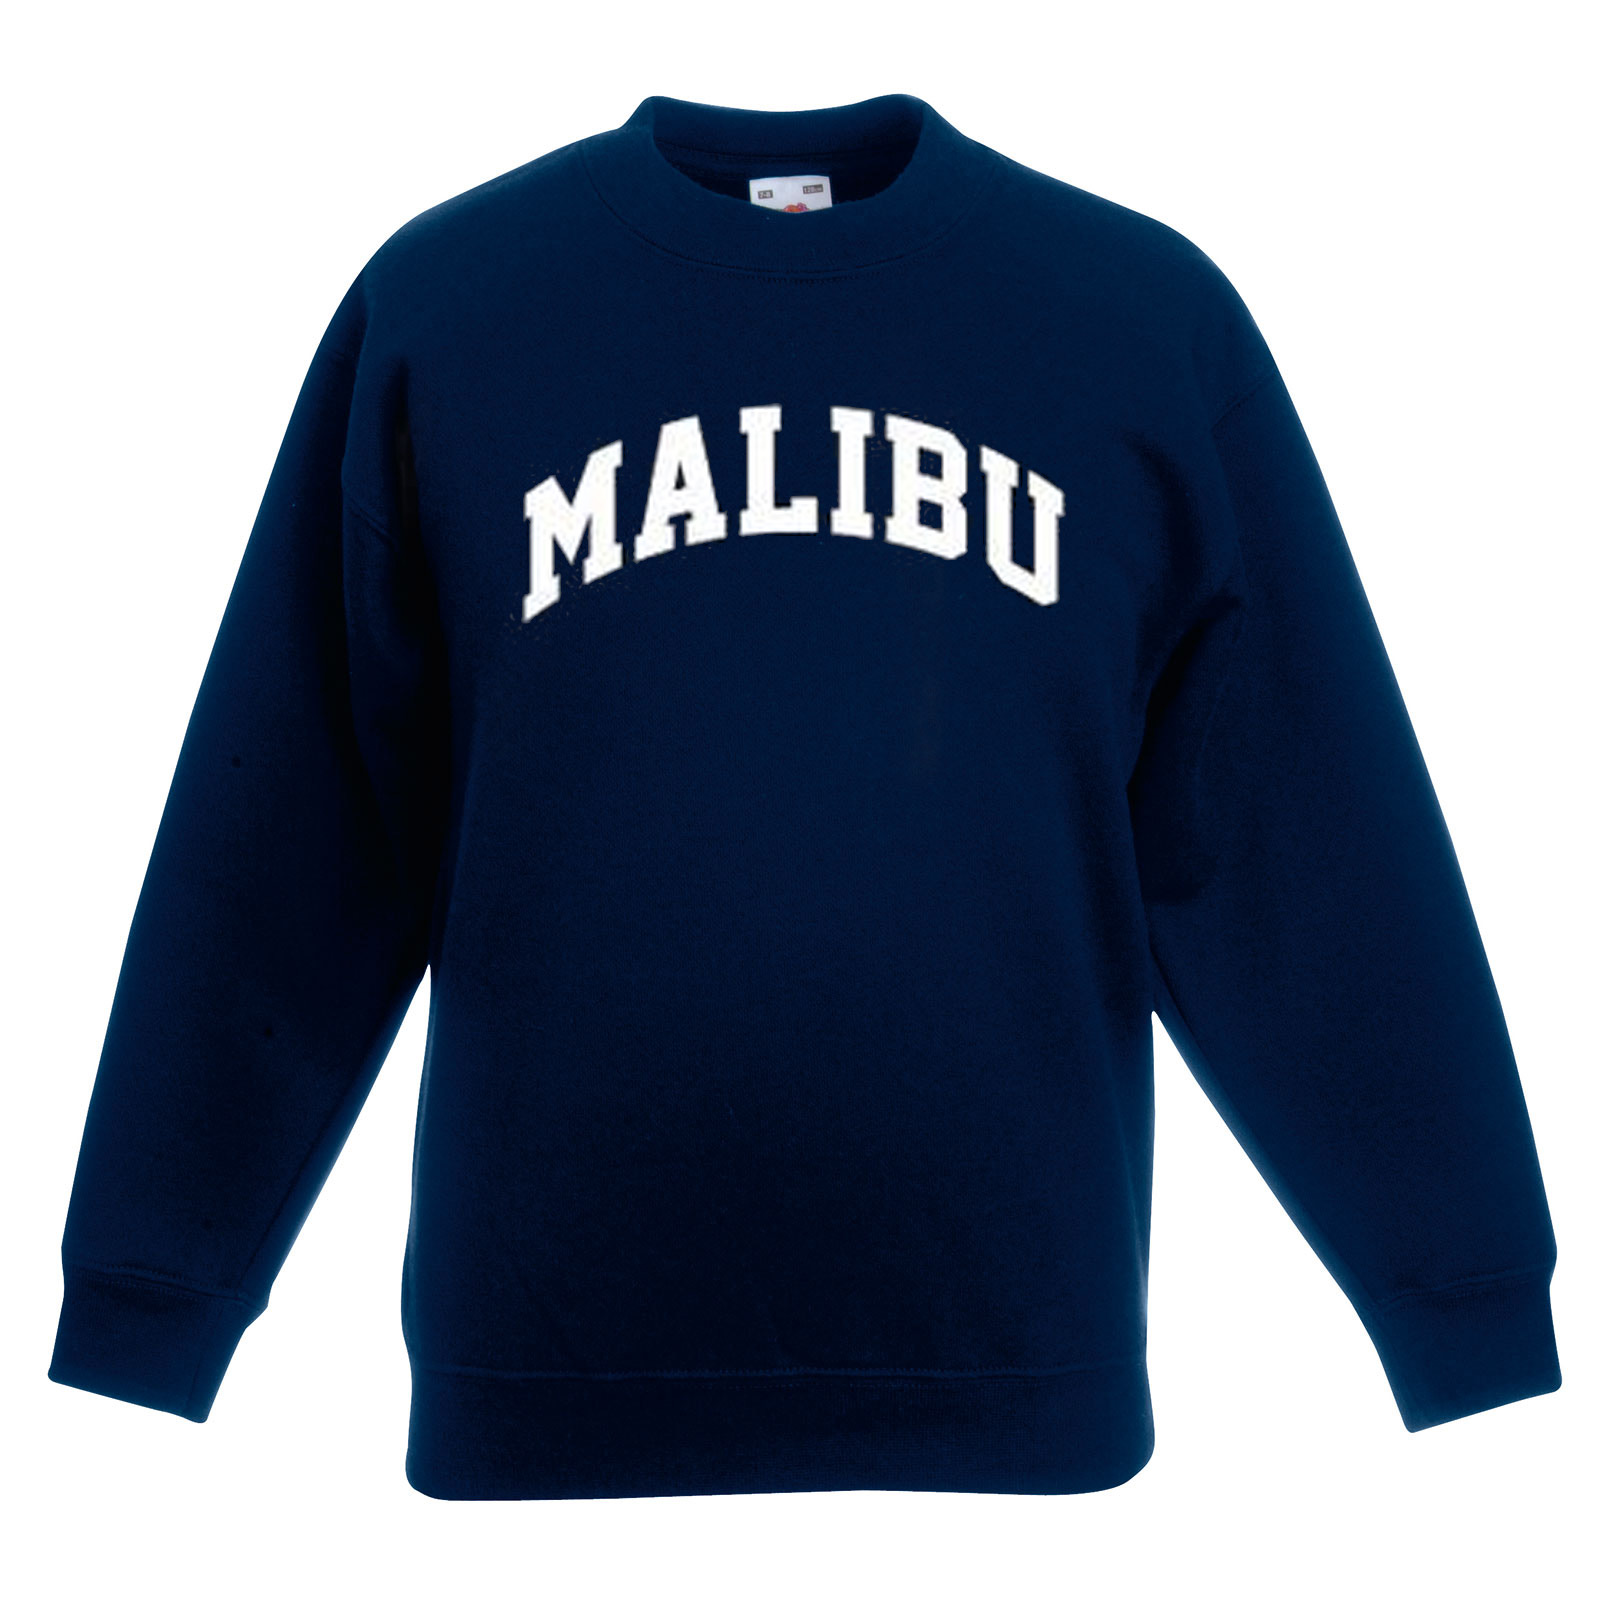 Malibu Blue Navy Sweatshirts - donefashion.com